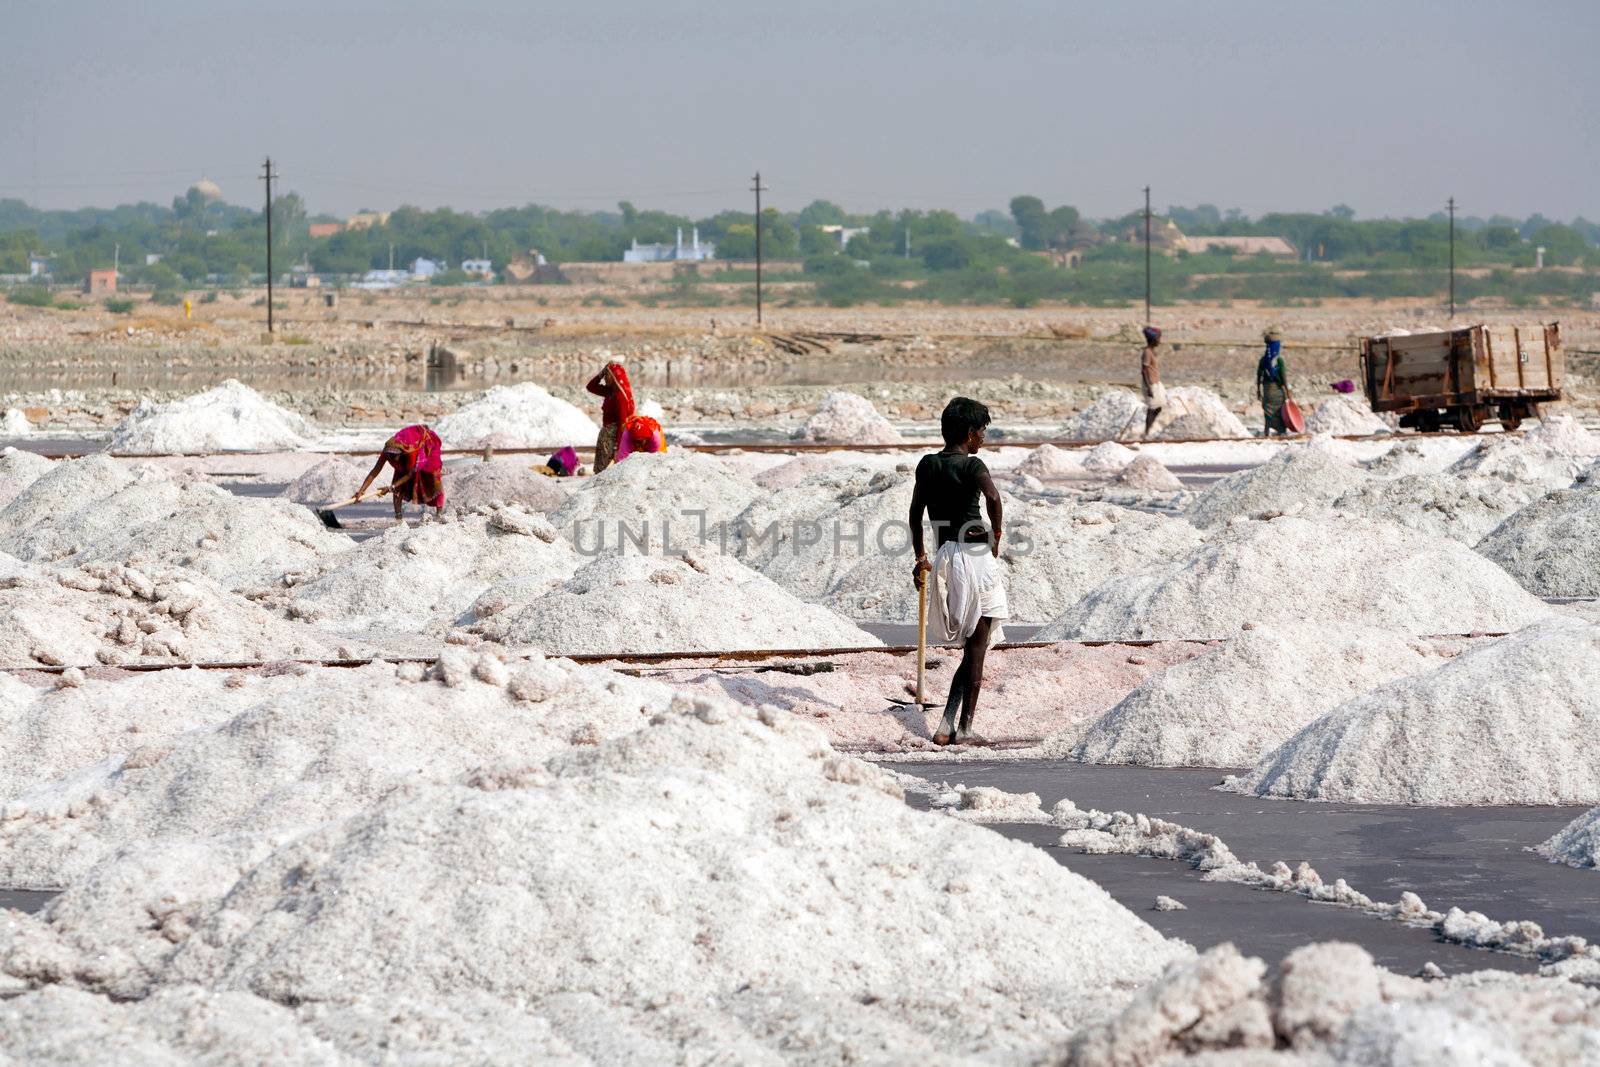 Salt works, Sambhar salt lake, Rajasthan, India by vladimir_sklyarov